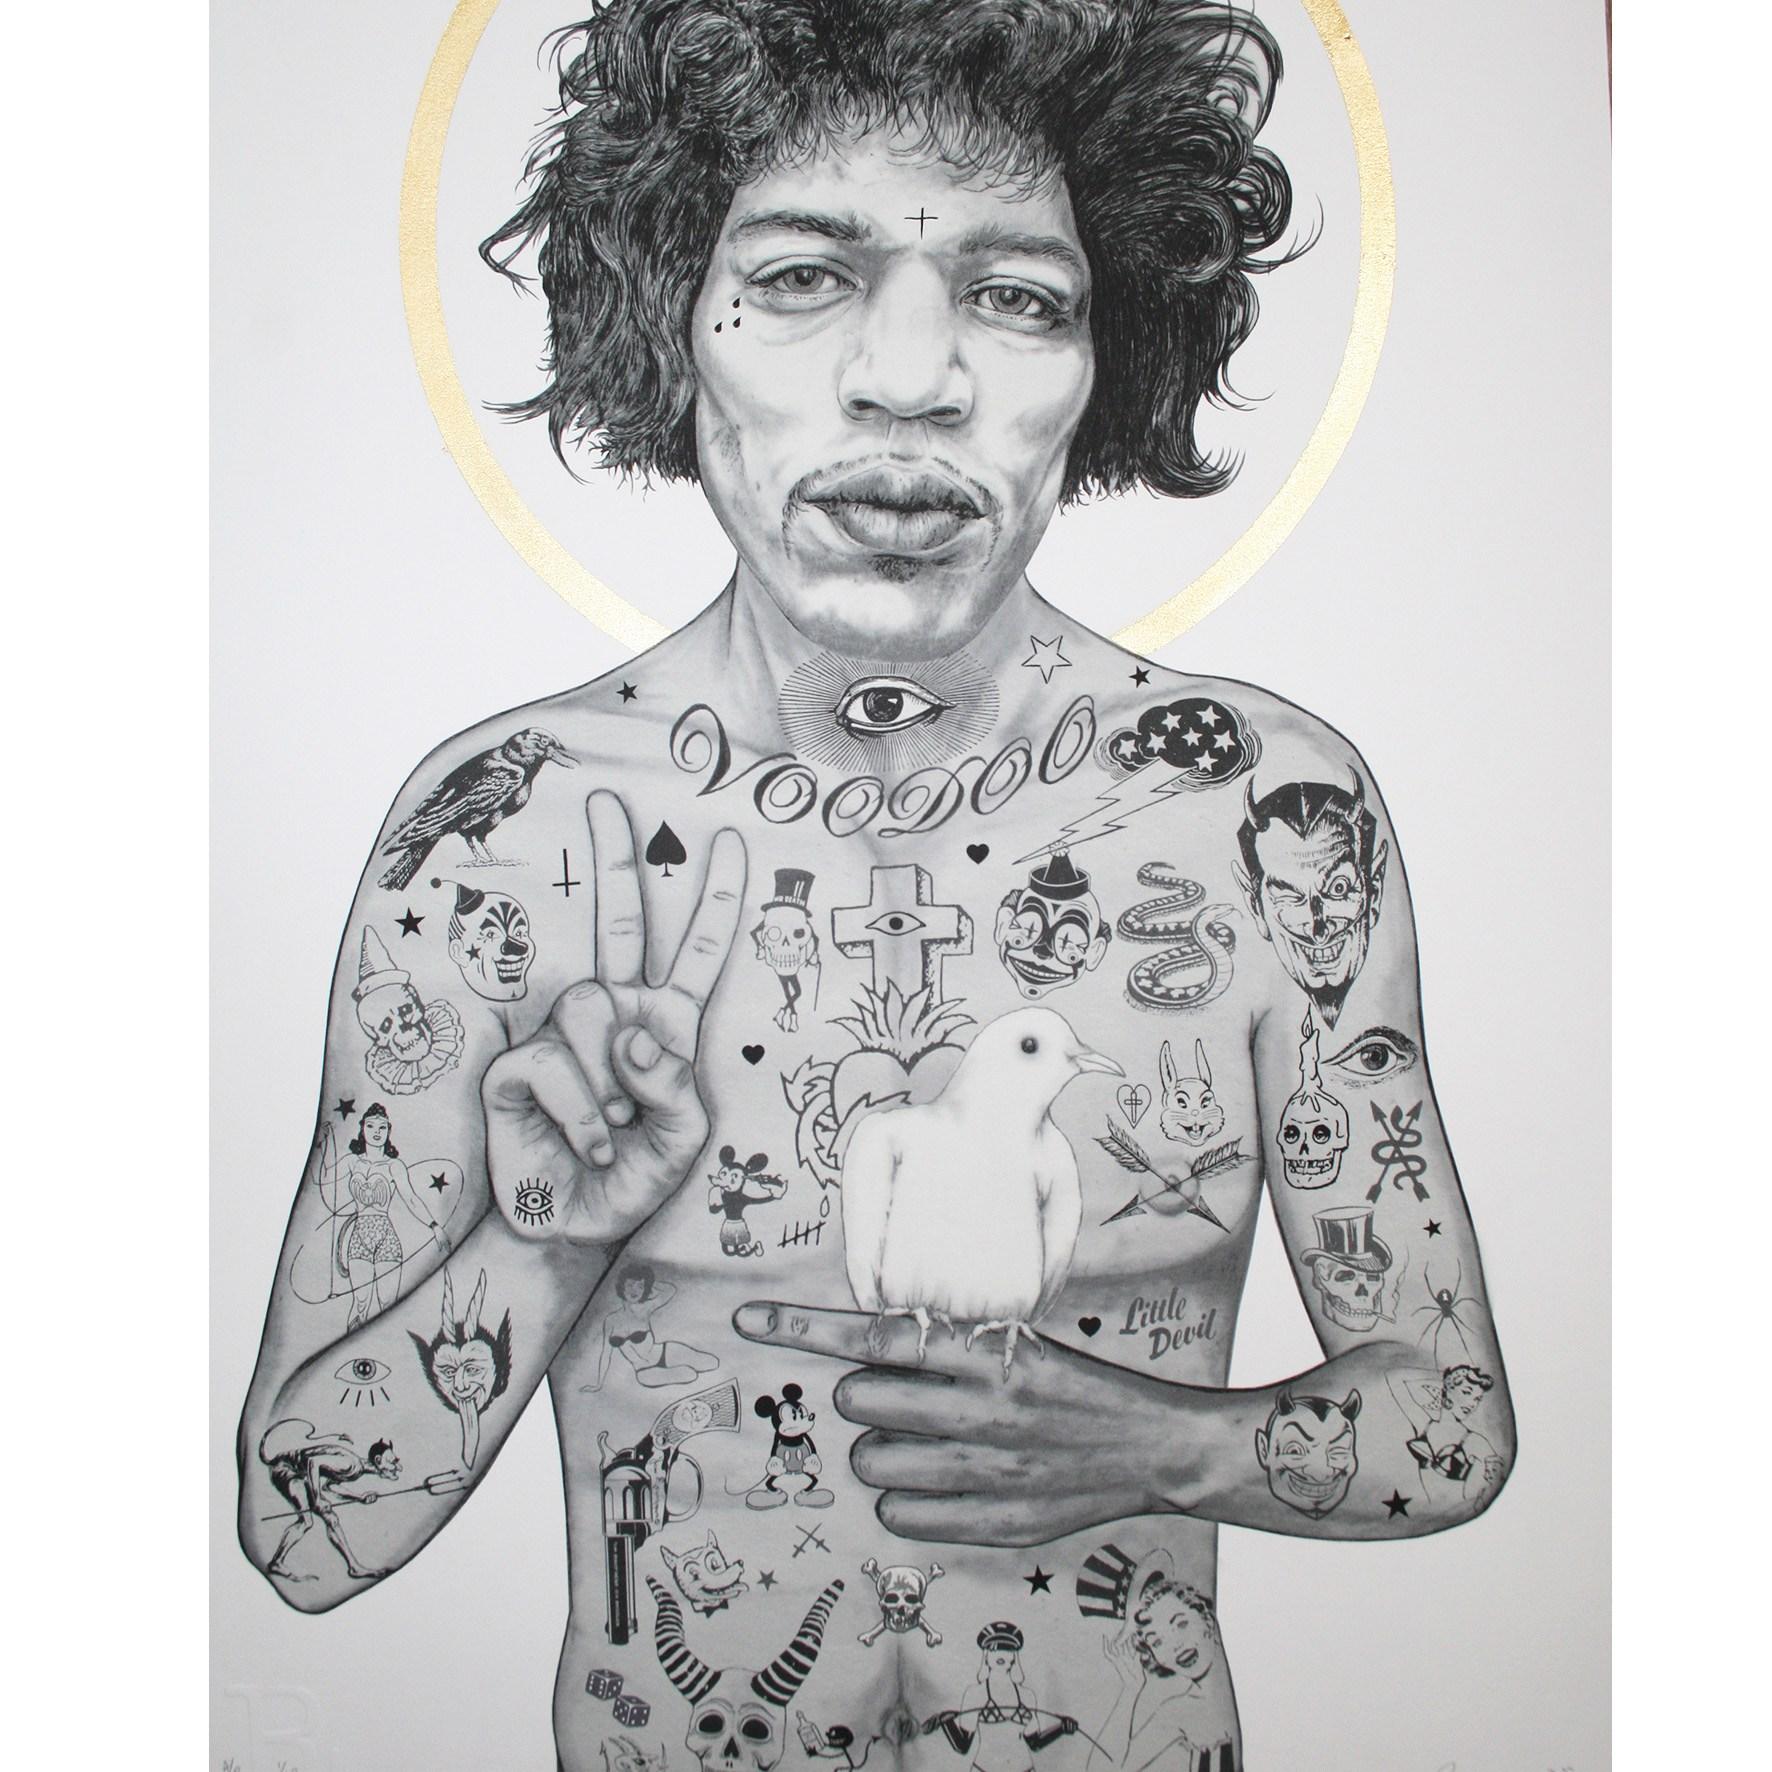 VOODOO – Jimi Hendrix Haze - Gray Portrait Print by Rugman